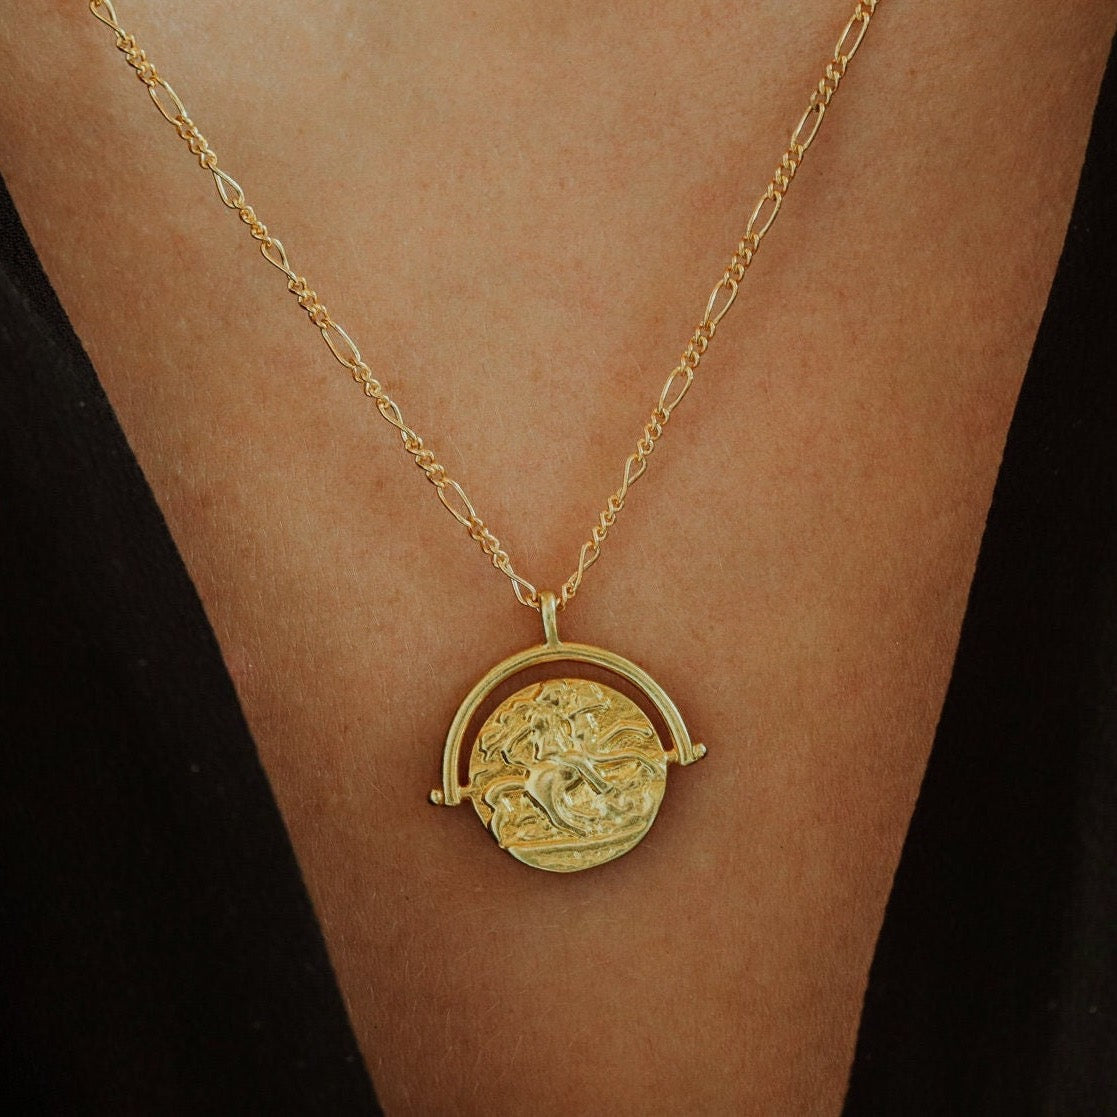 Greek pendant necklace